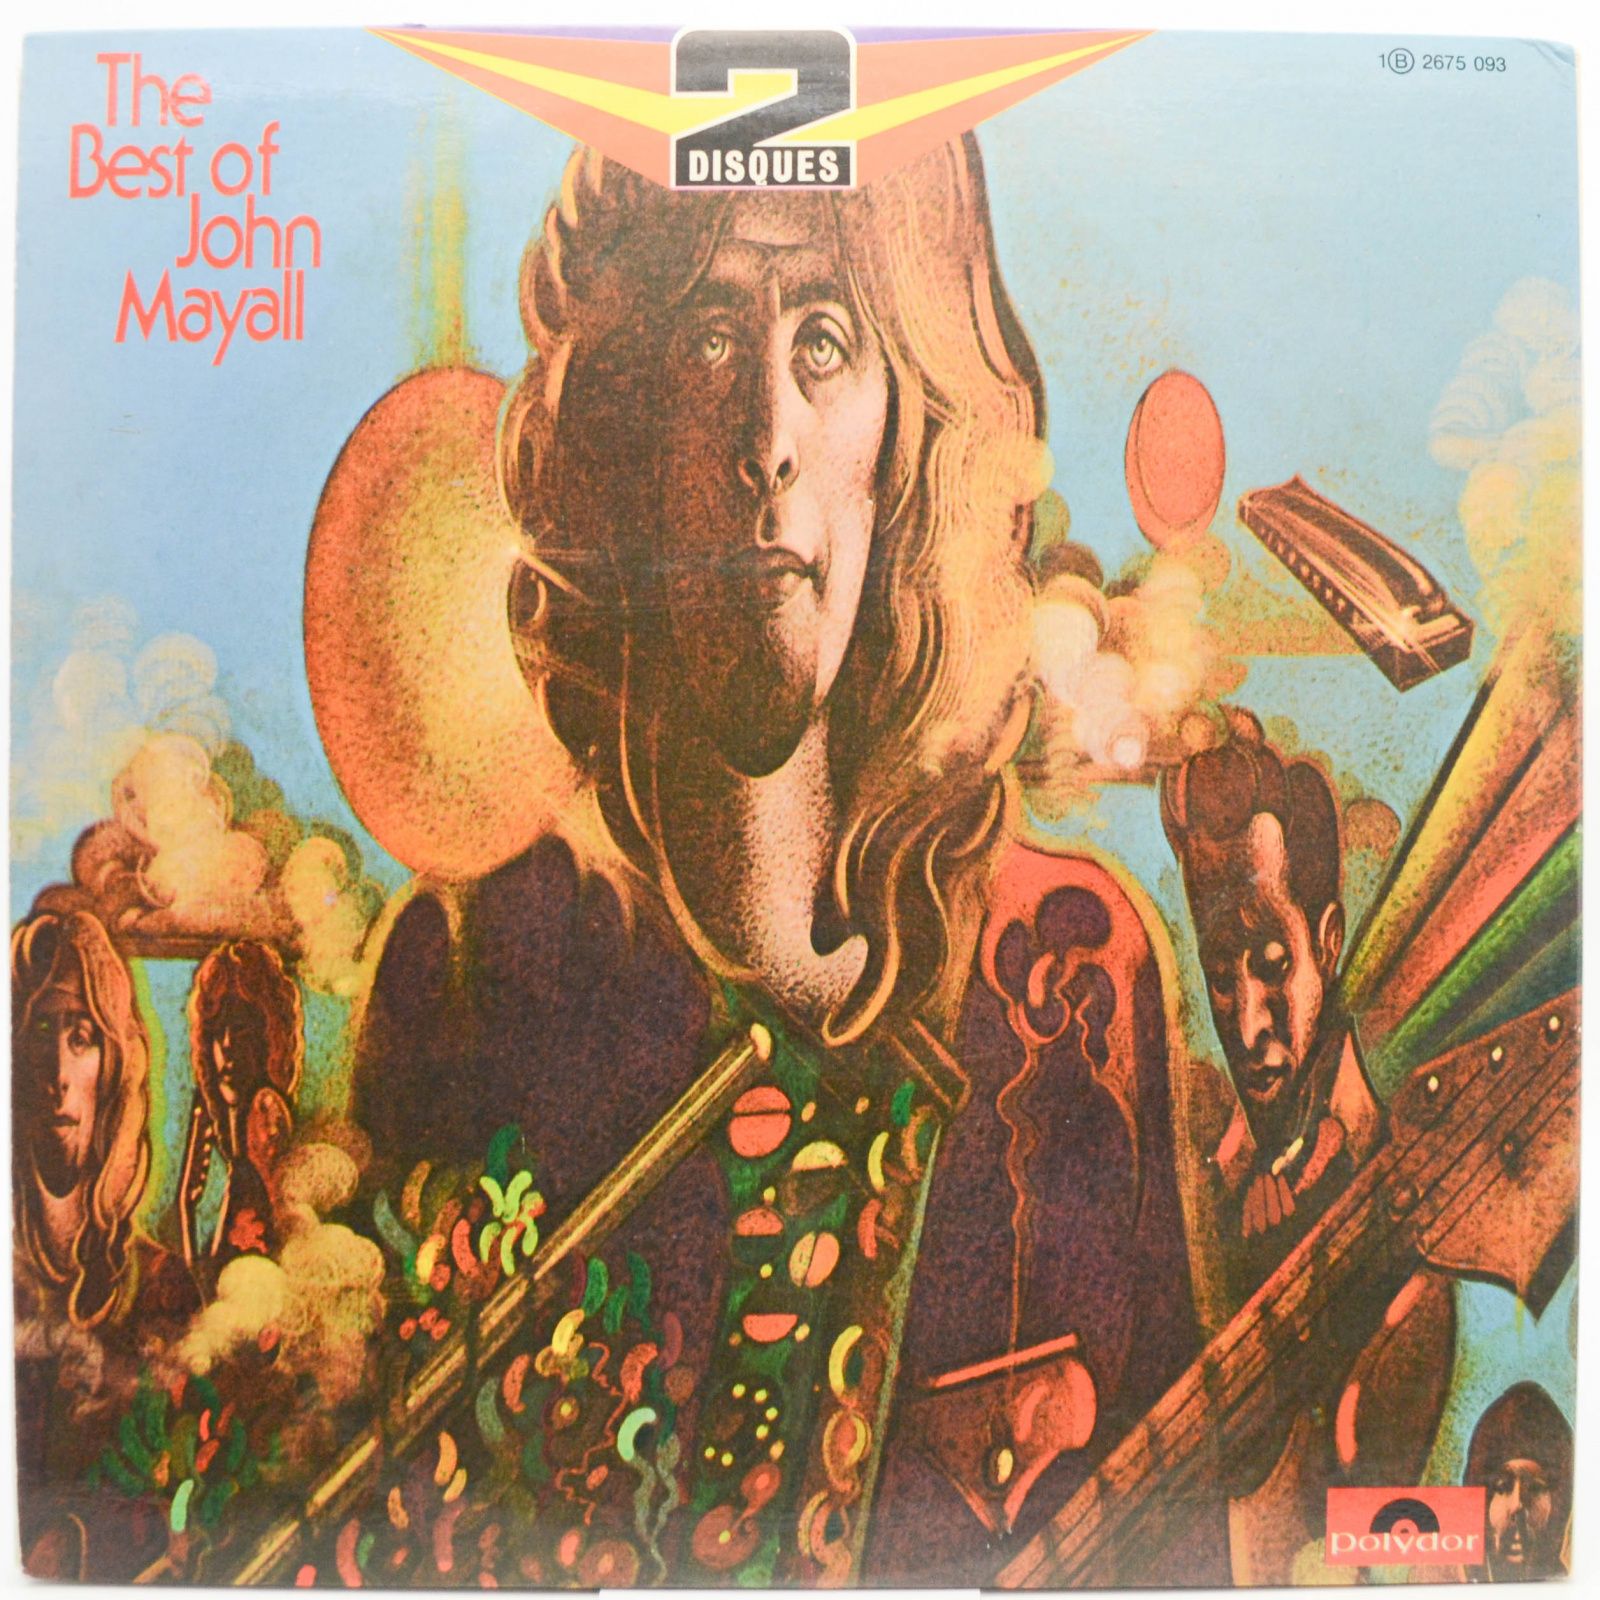 John Mayall — The Best Of John Mayall (2LP), 1973